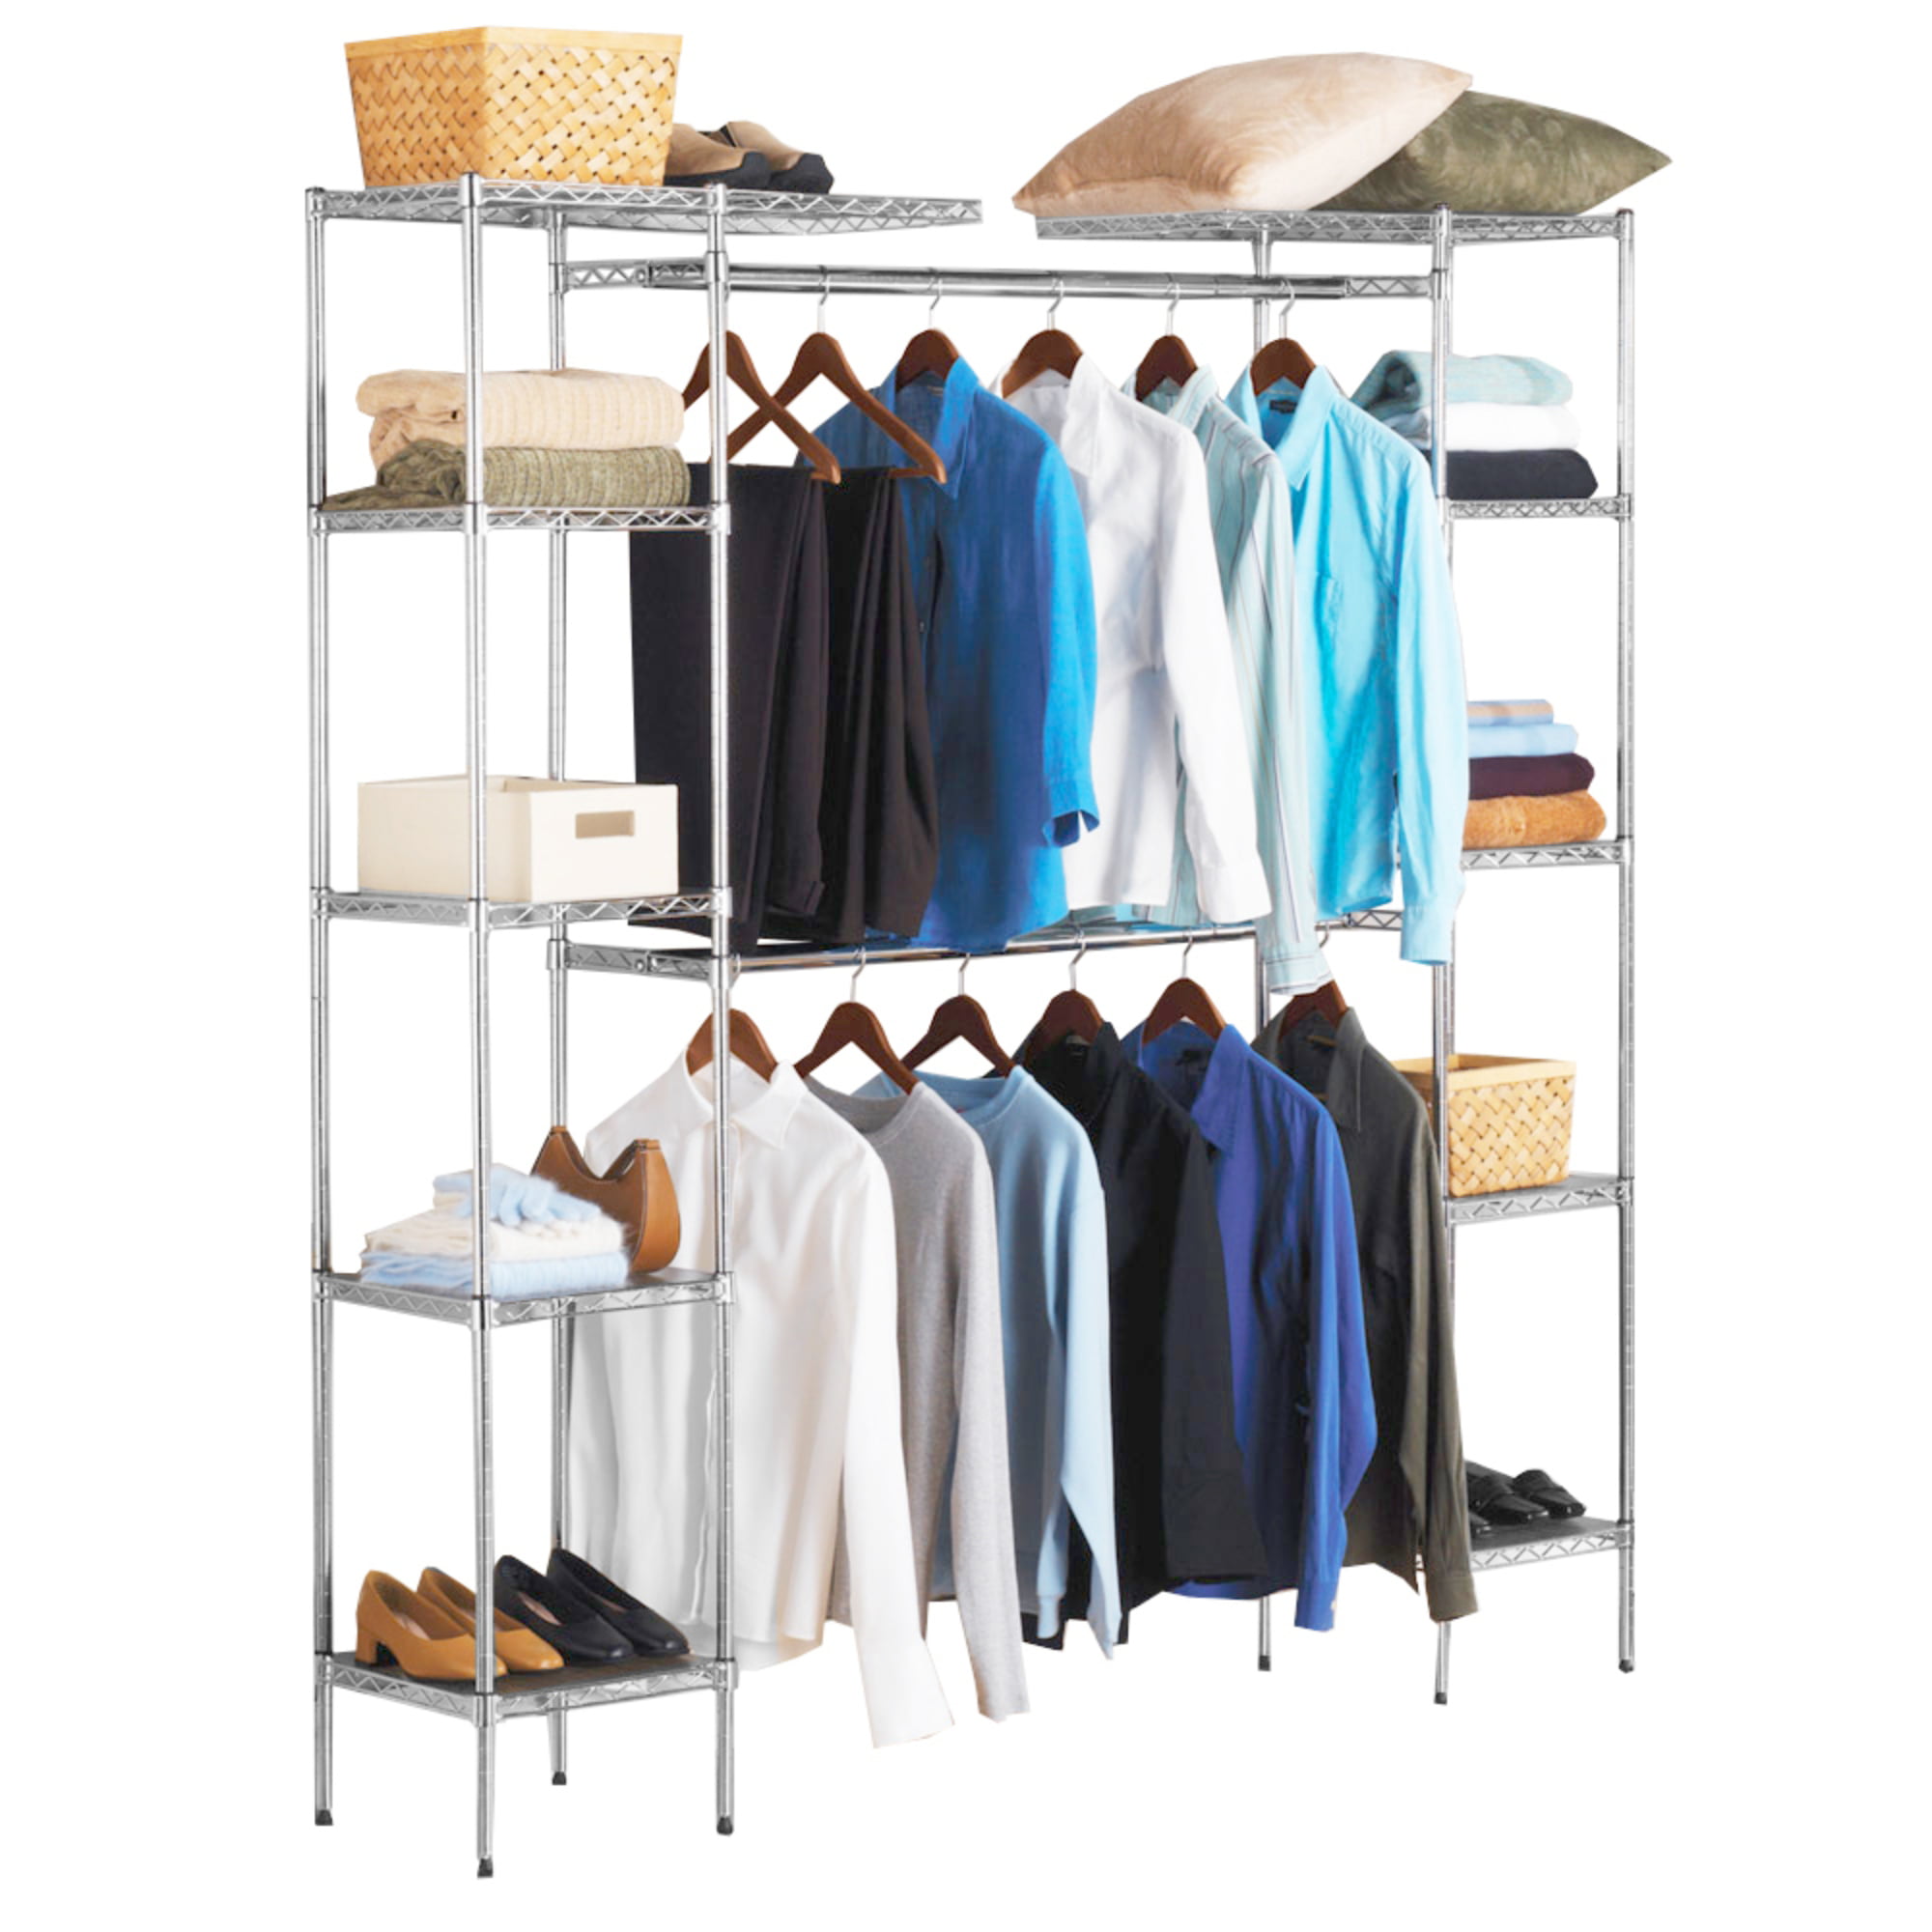 Details about   Bedroom Closet Organizer Shelf System Kit Expandable Clothes Storage Metal Rack